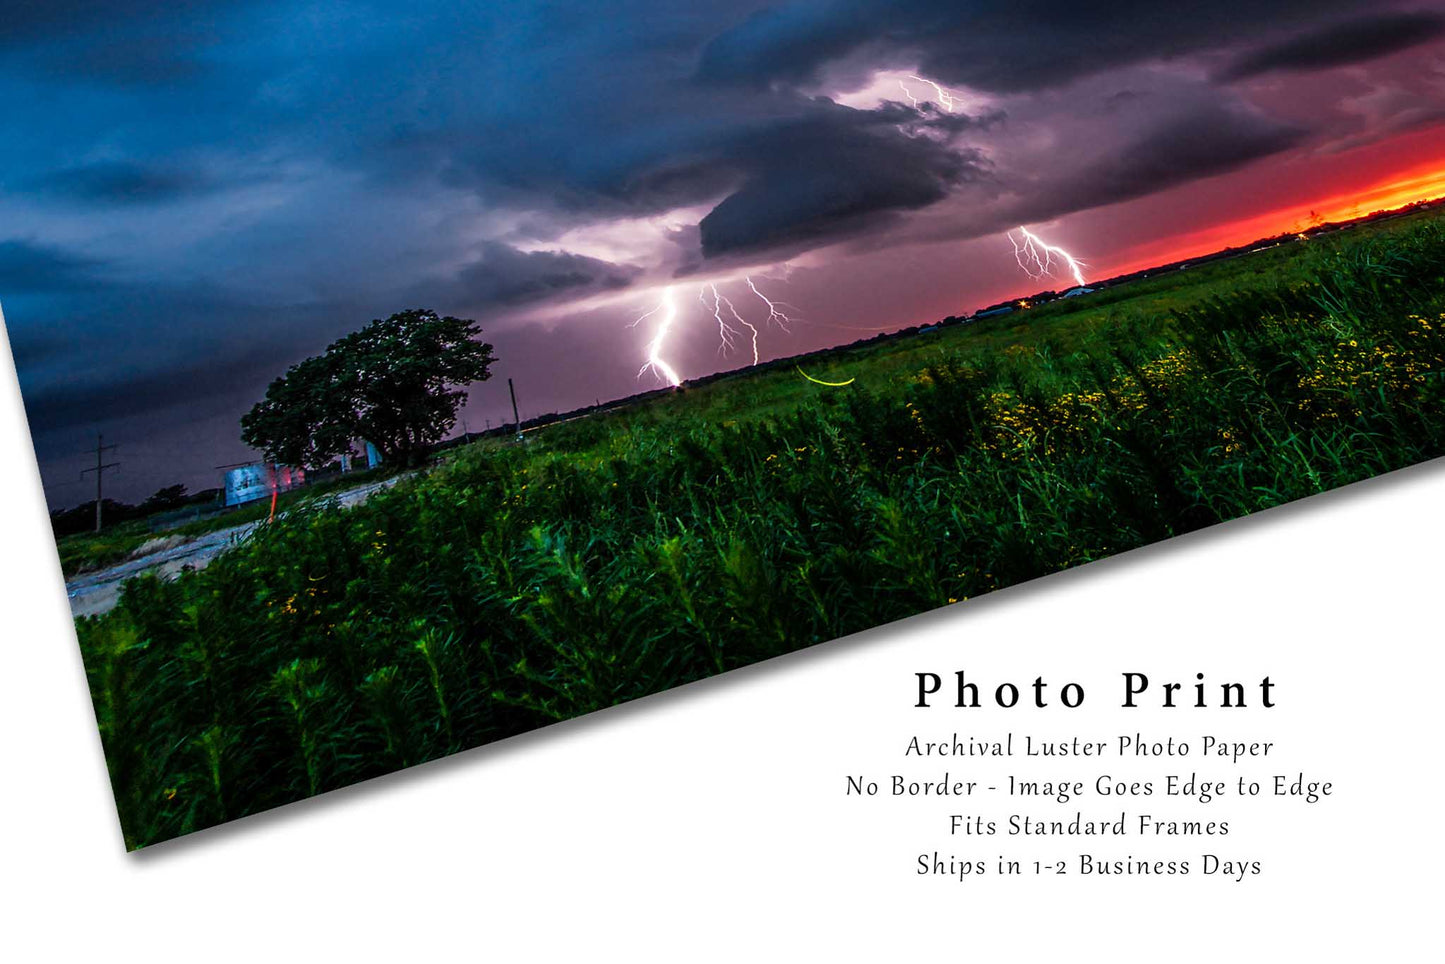 Storm Photography Print | Lightning Picture | Firefly Wall Art | Oklahoma Photo | Thunderstorm Decor | Not Framed